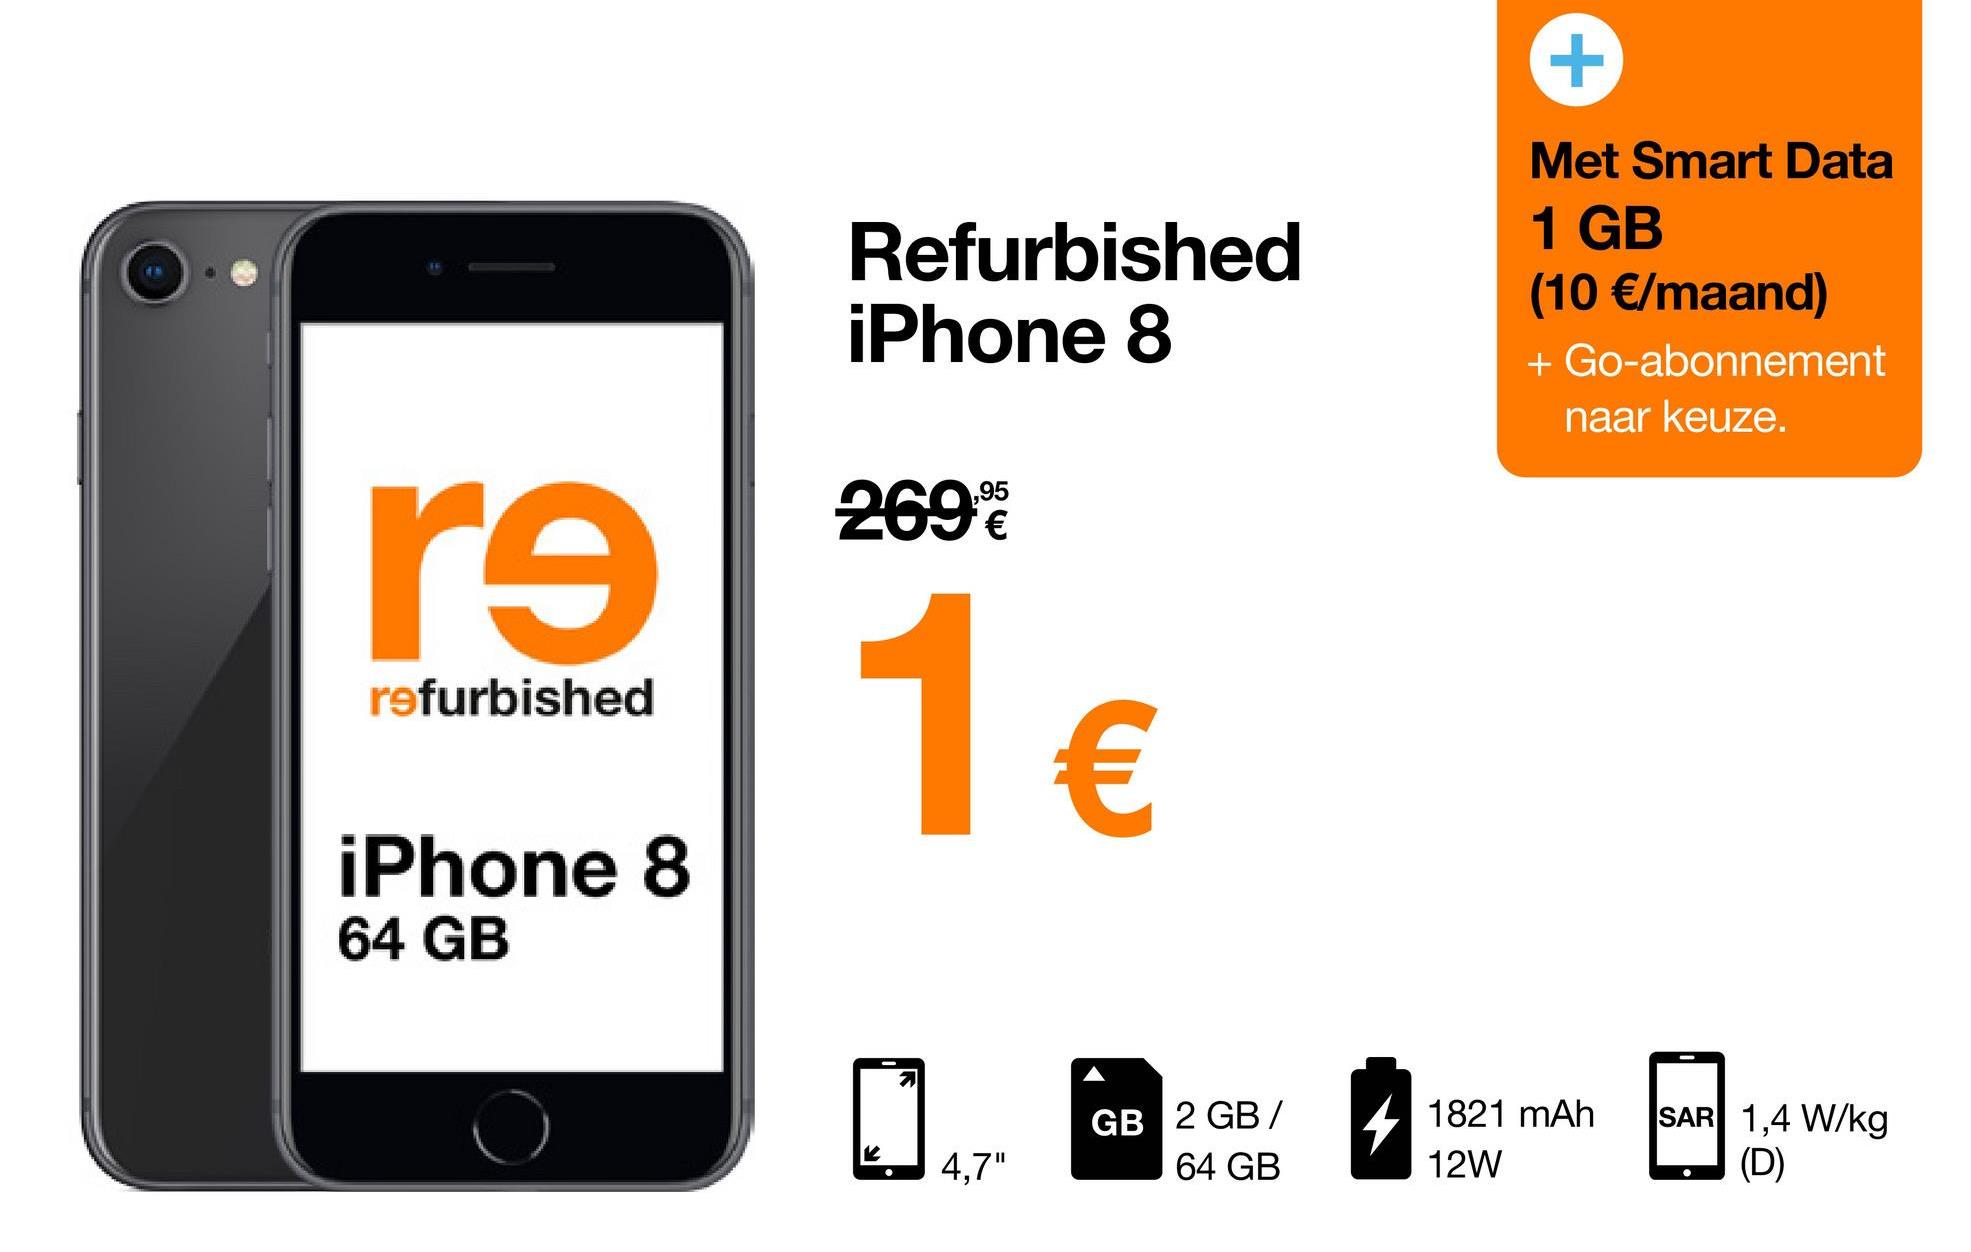 r9
refurbished
iPhone 8
64 GB
Refurbished
iPhone 8
,95
269 '€
1 €
K
4,7"
GB 2 GB/
64 GB
+
Met Smart Data
1 GB
(10 €/maand)
+ Go-abonnement
naar keuze.
1821 mAh
12W
SAR 1,4 W/kg
(D)
.